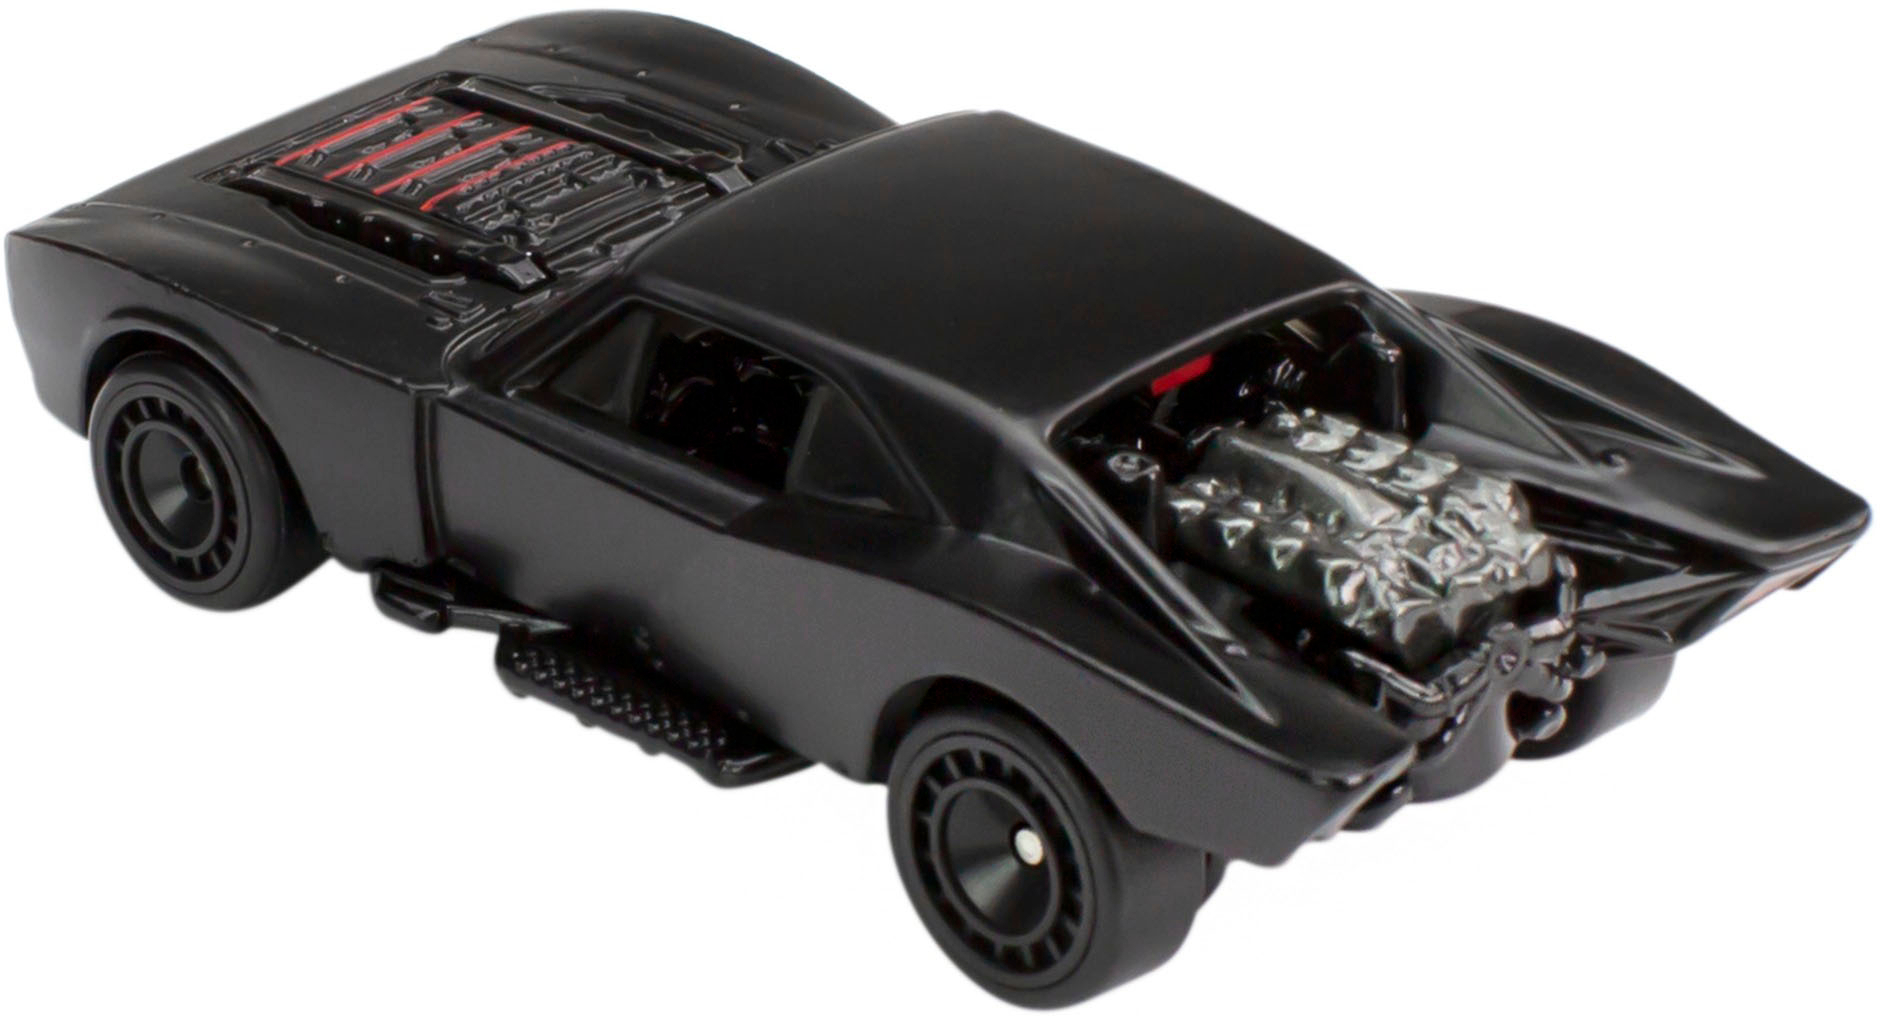 Hot Wheels Batman 5 Car Set Bundle Version 1